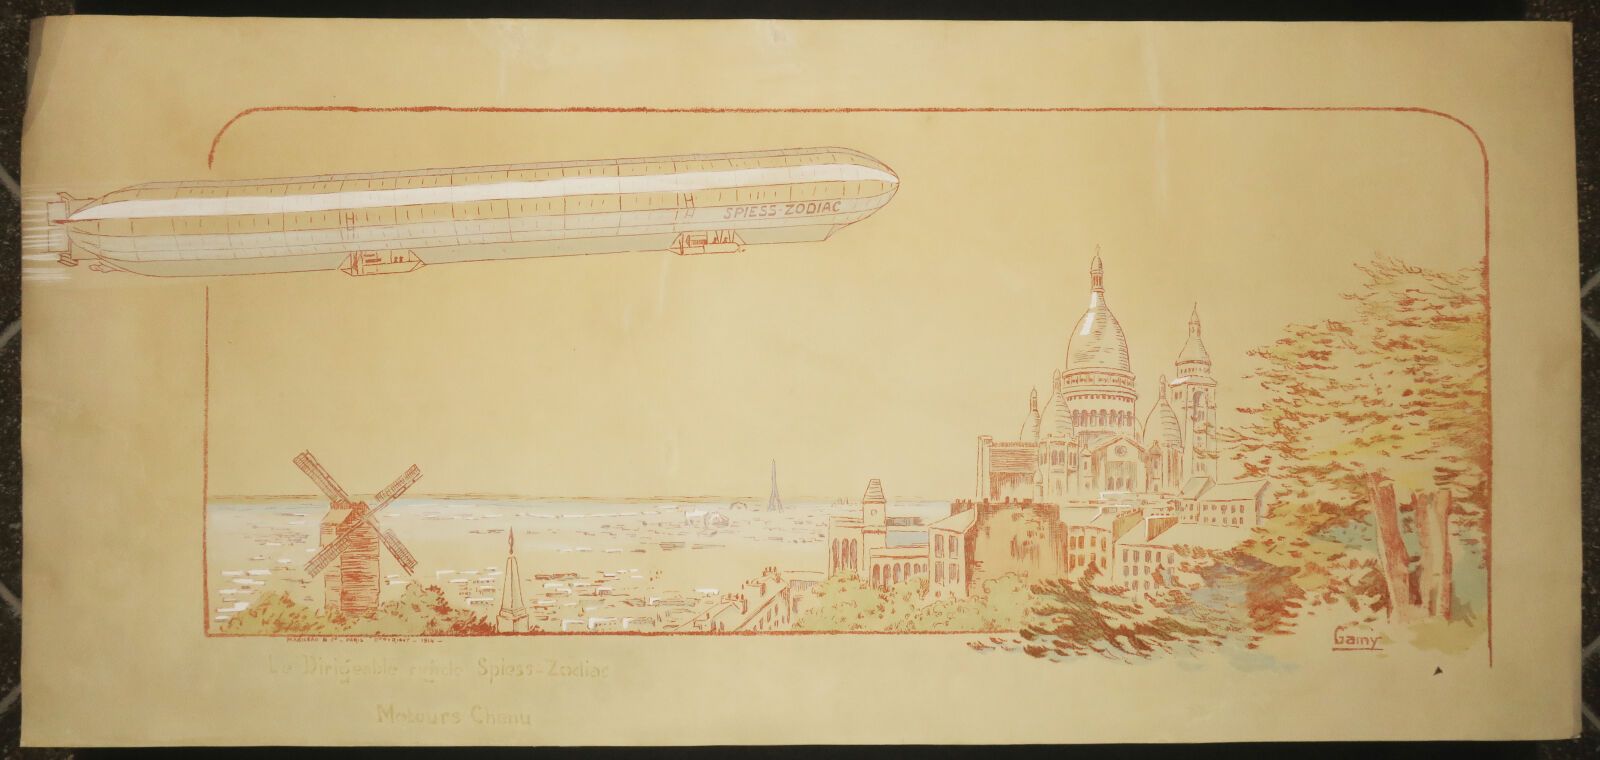 Null BALLON DIRIGEABLE - GAMY (XXth) - "The rigid airship Spiess-Zodaic / Motour&hellip;